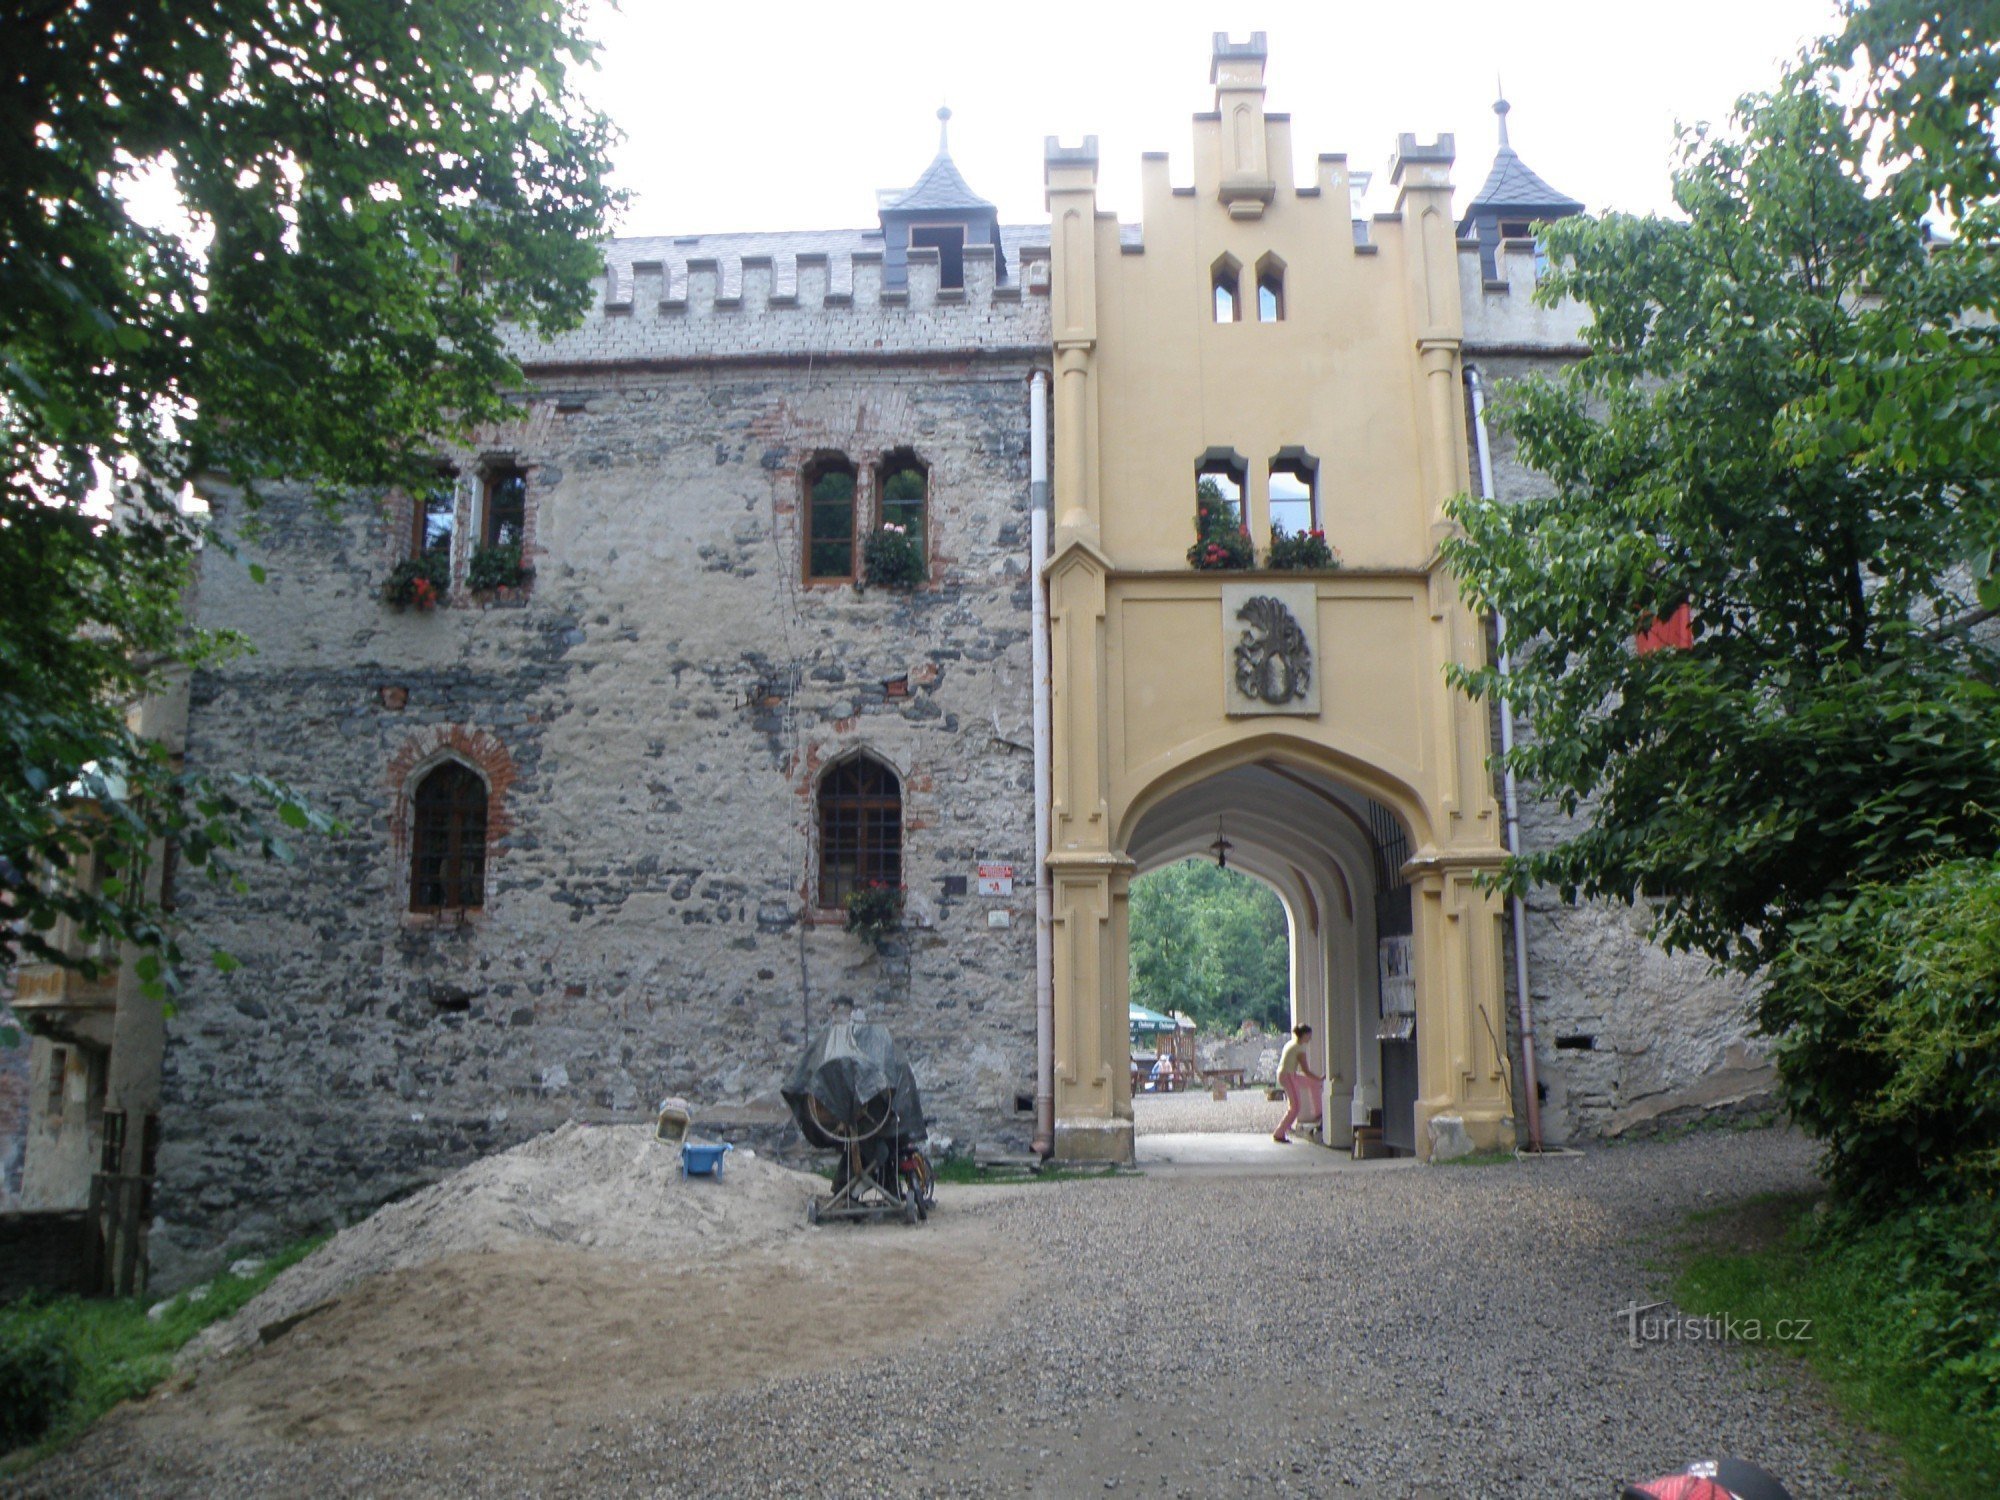 Eingangstor von Horní Hrad